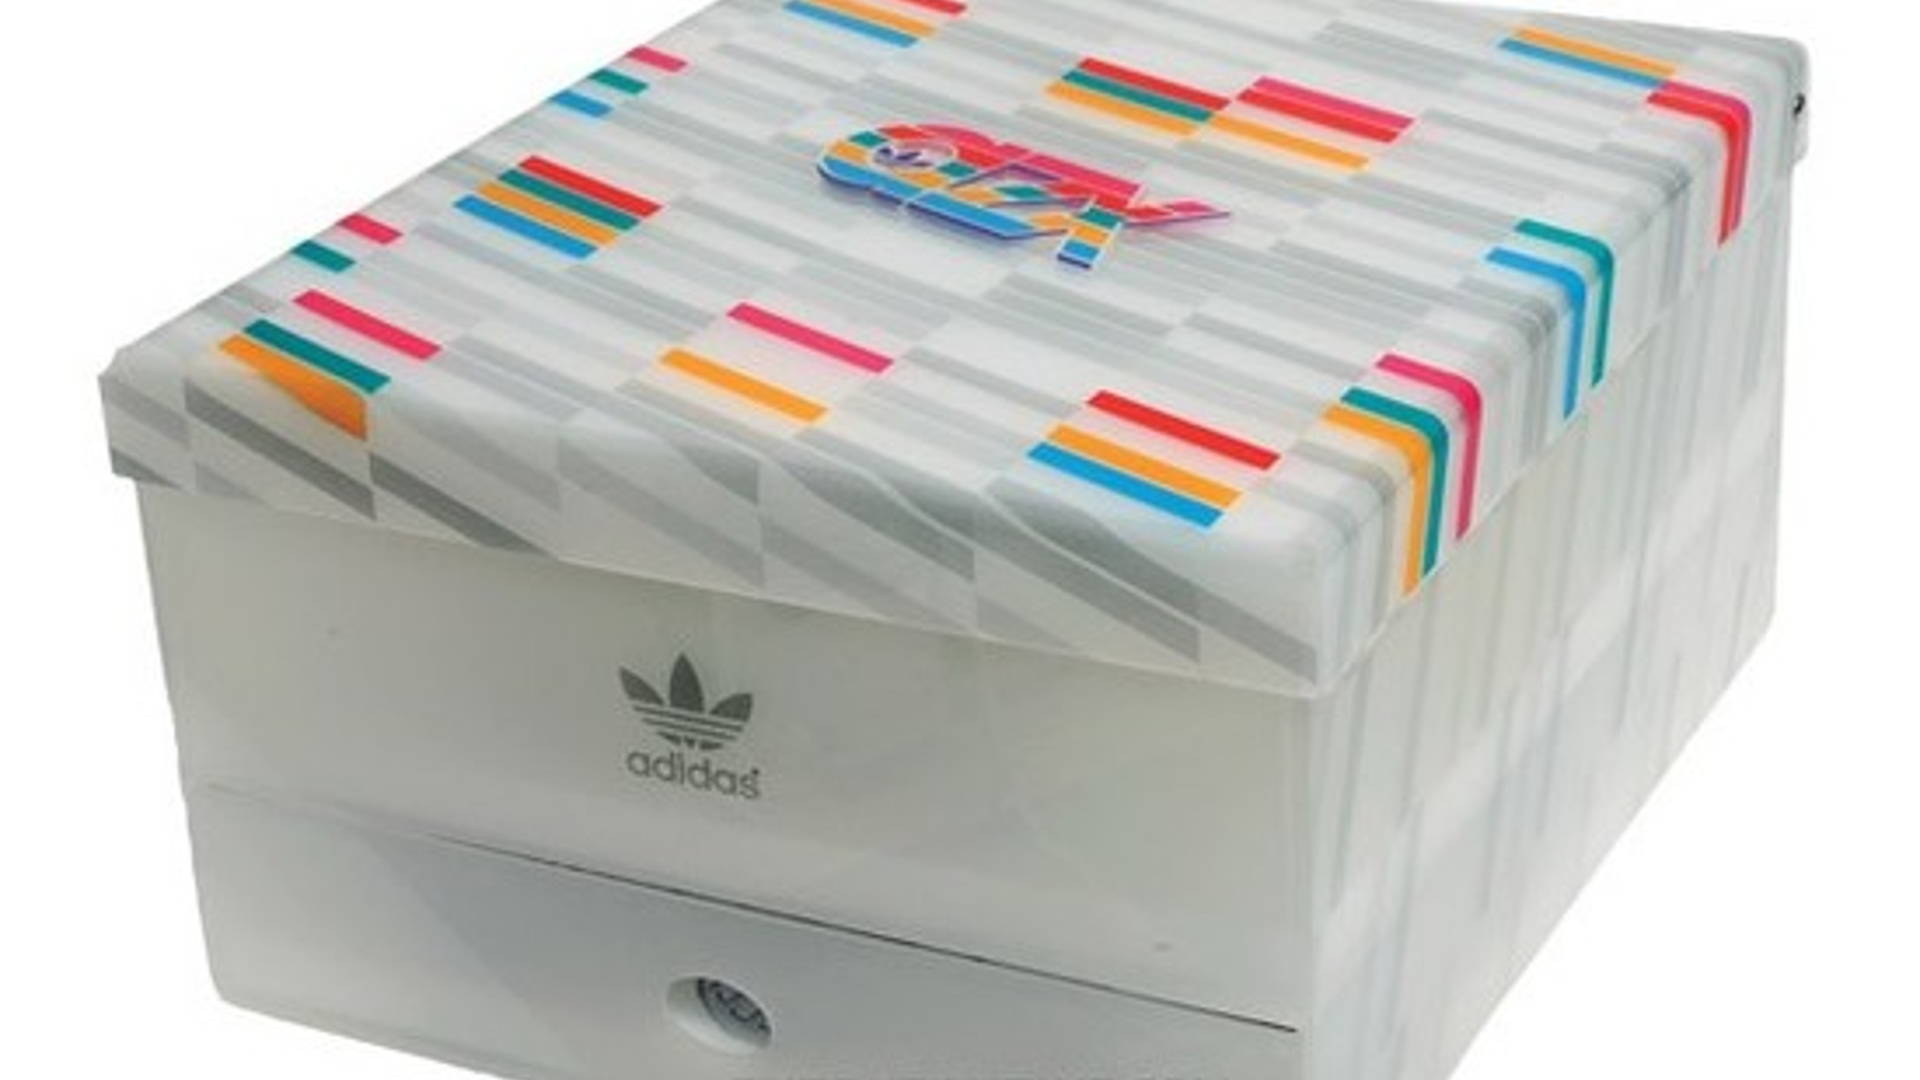 adidas Originals aZX project | Dieline - Design, & Packaging Inspiration